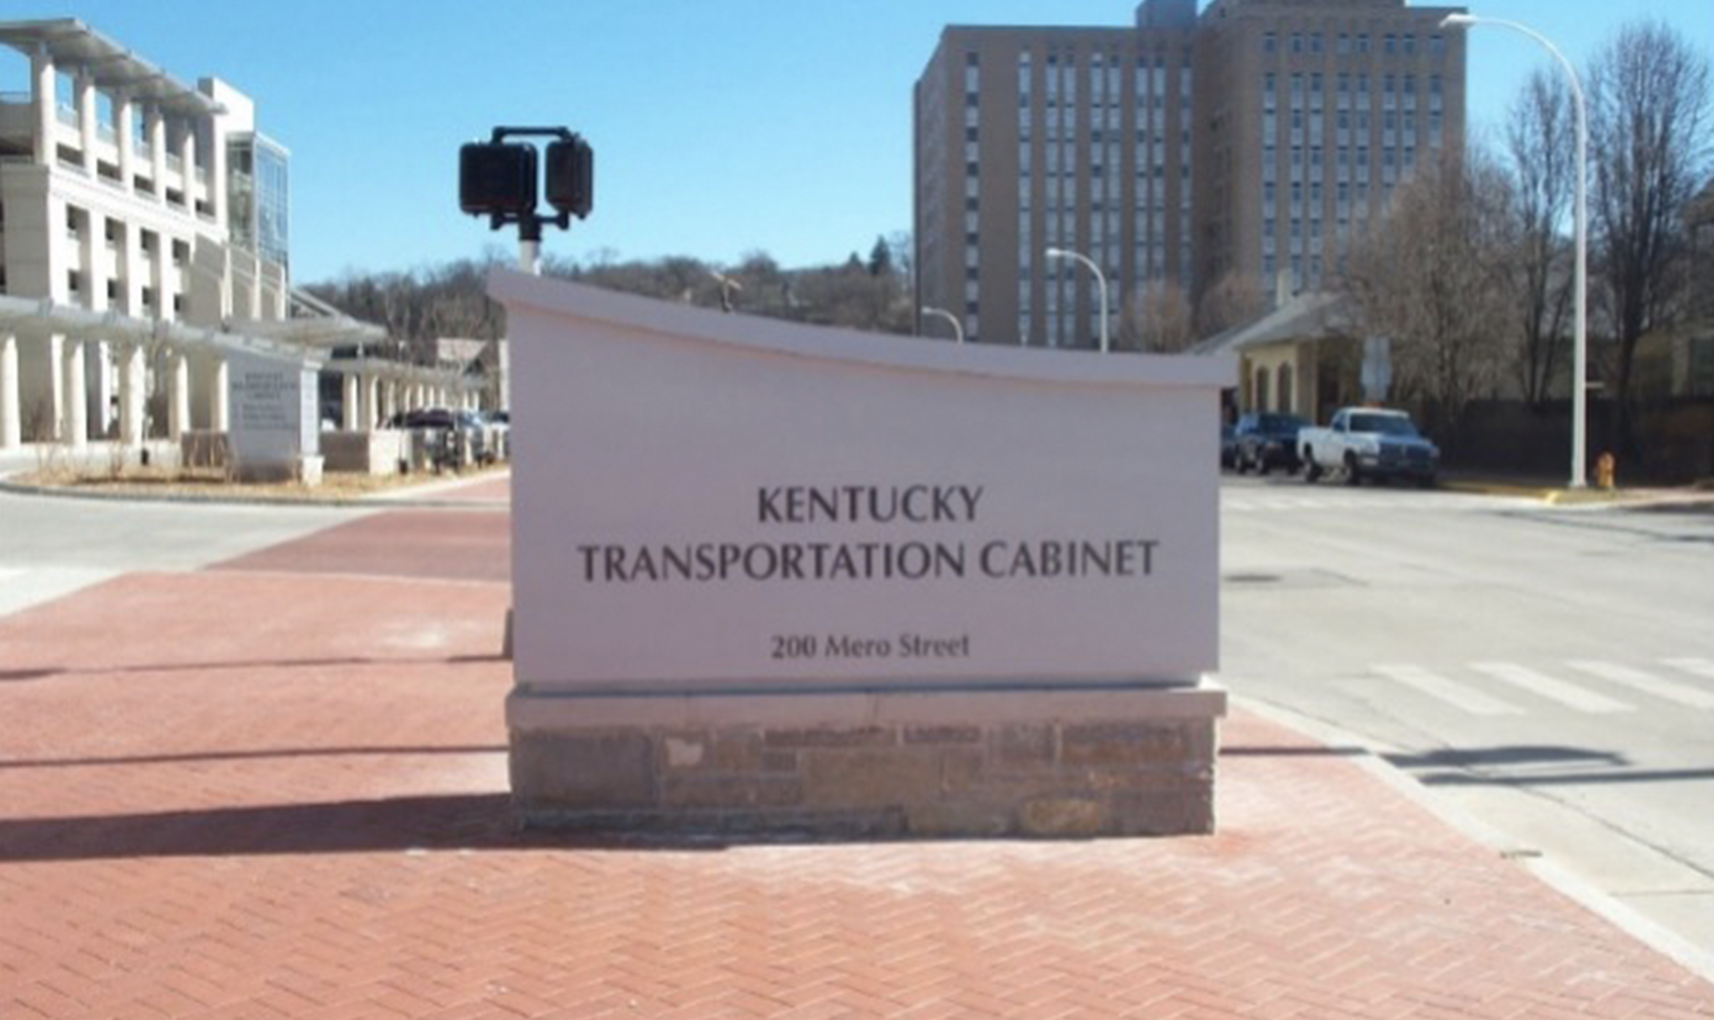 The Kentucky Transportation Cabinet